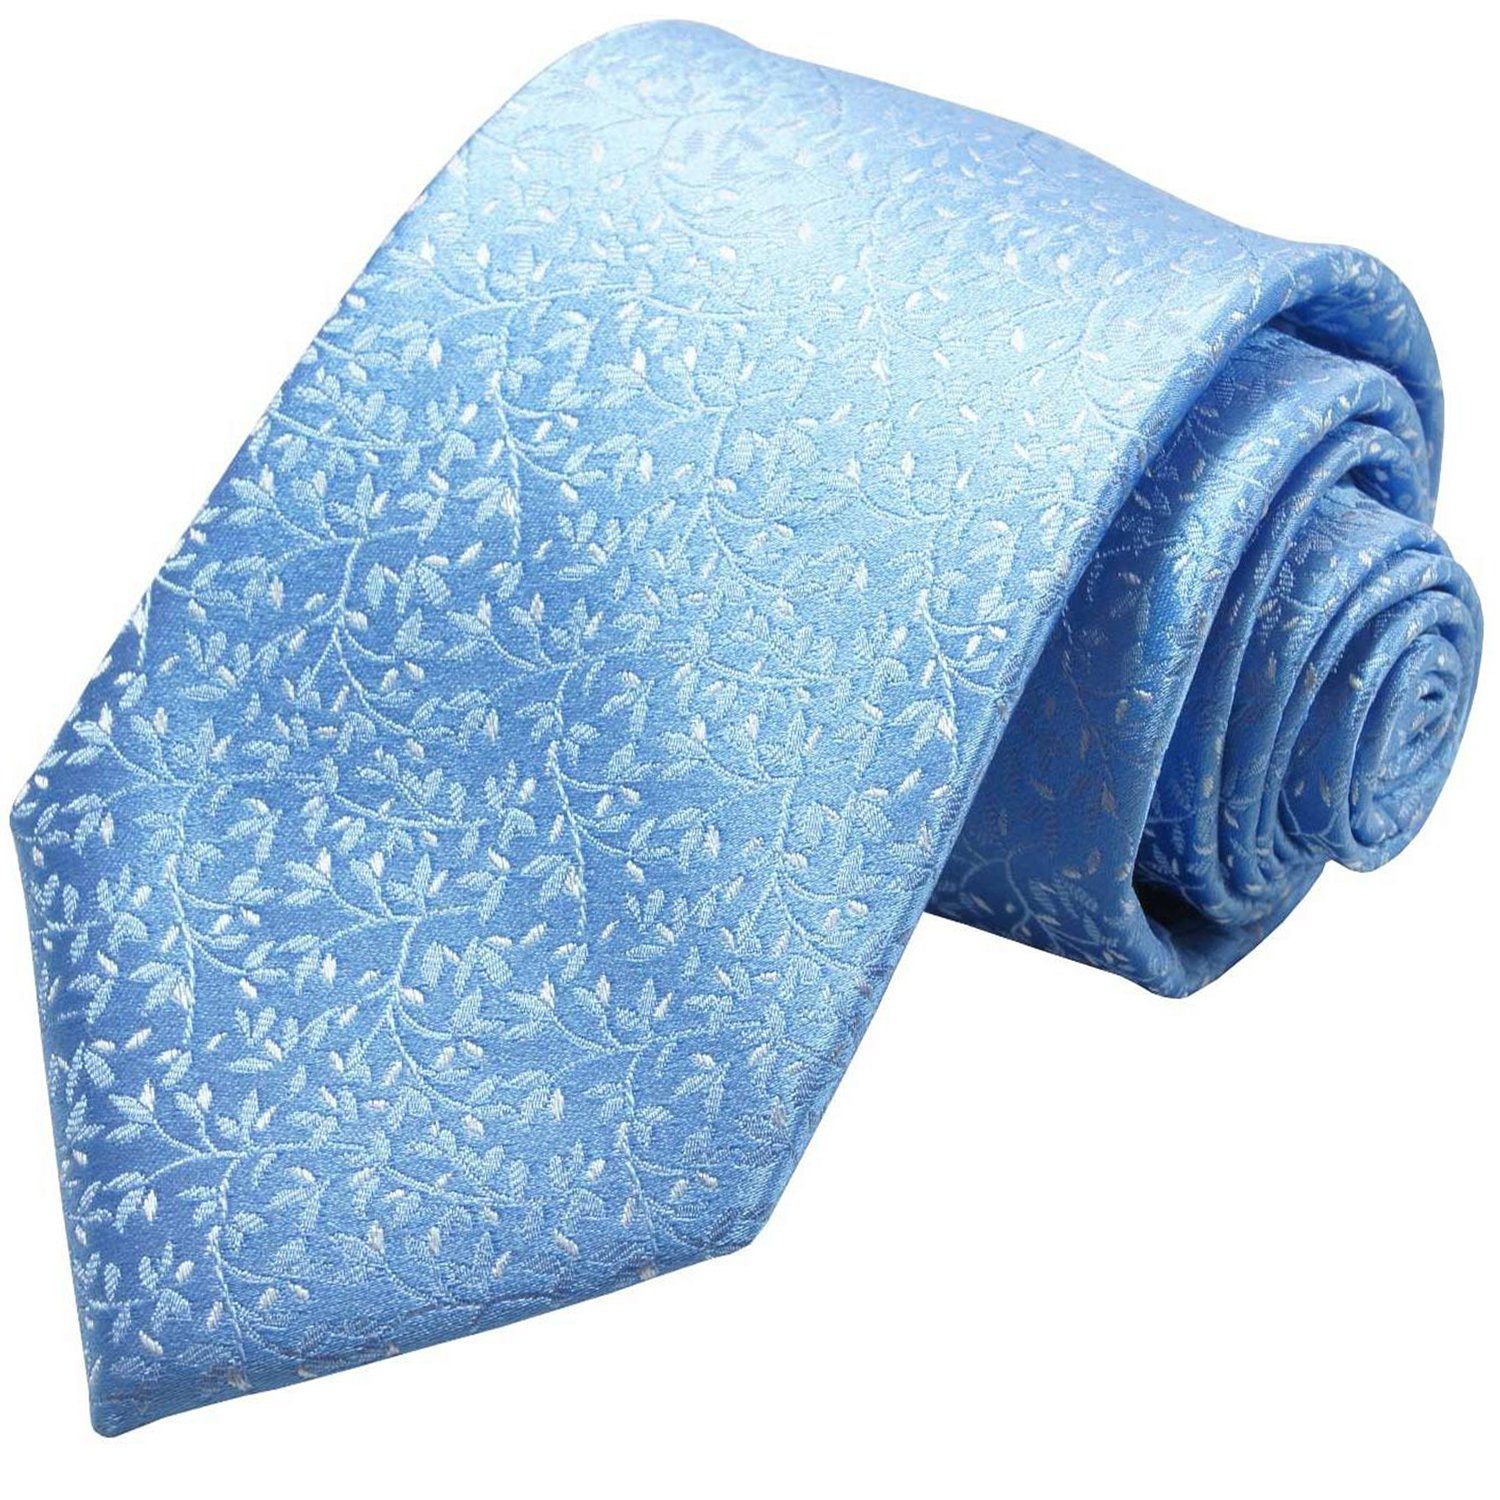 Paul Malone Krawatte Herren Seidenkrawatte Designer Schlips modern geblümt 100% Seide Schmal (6cm), Extra lang (165cm), hellblau 2133